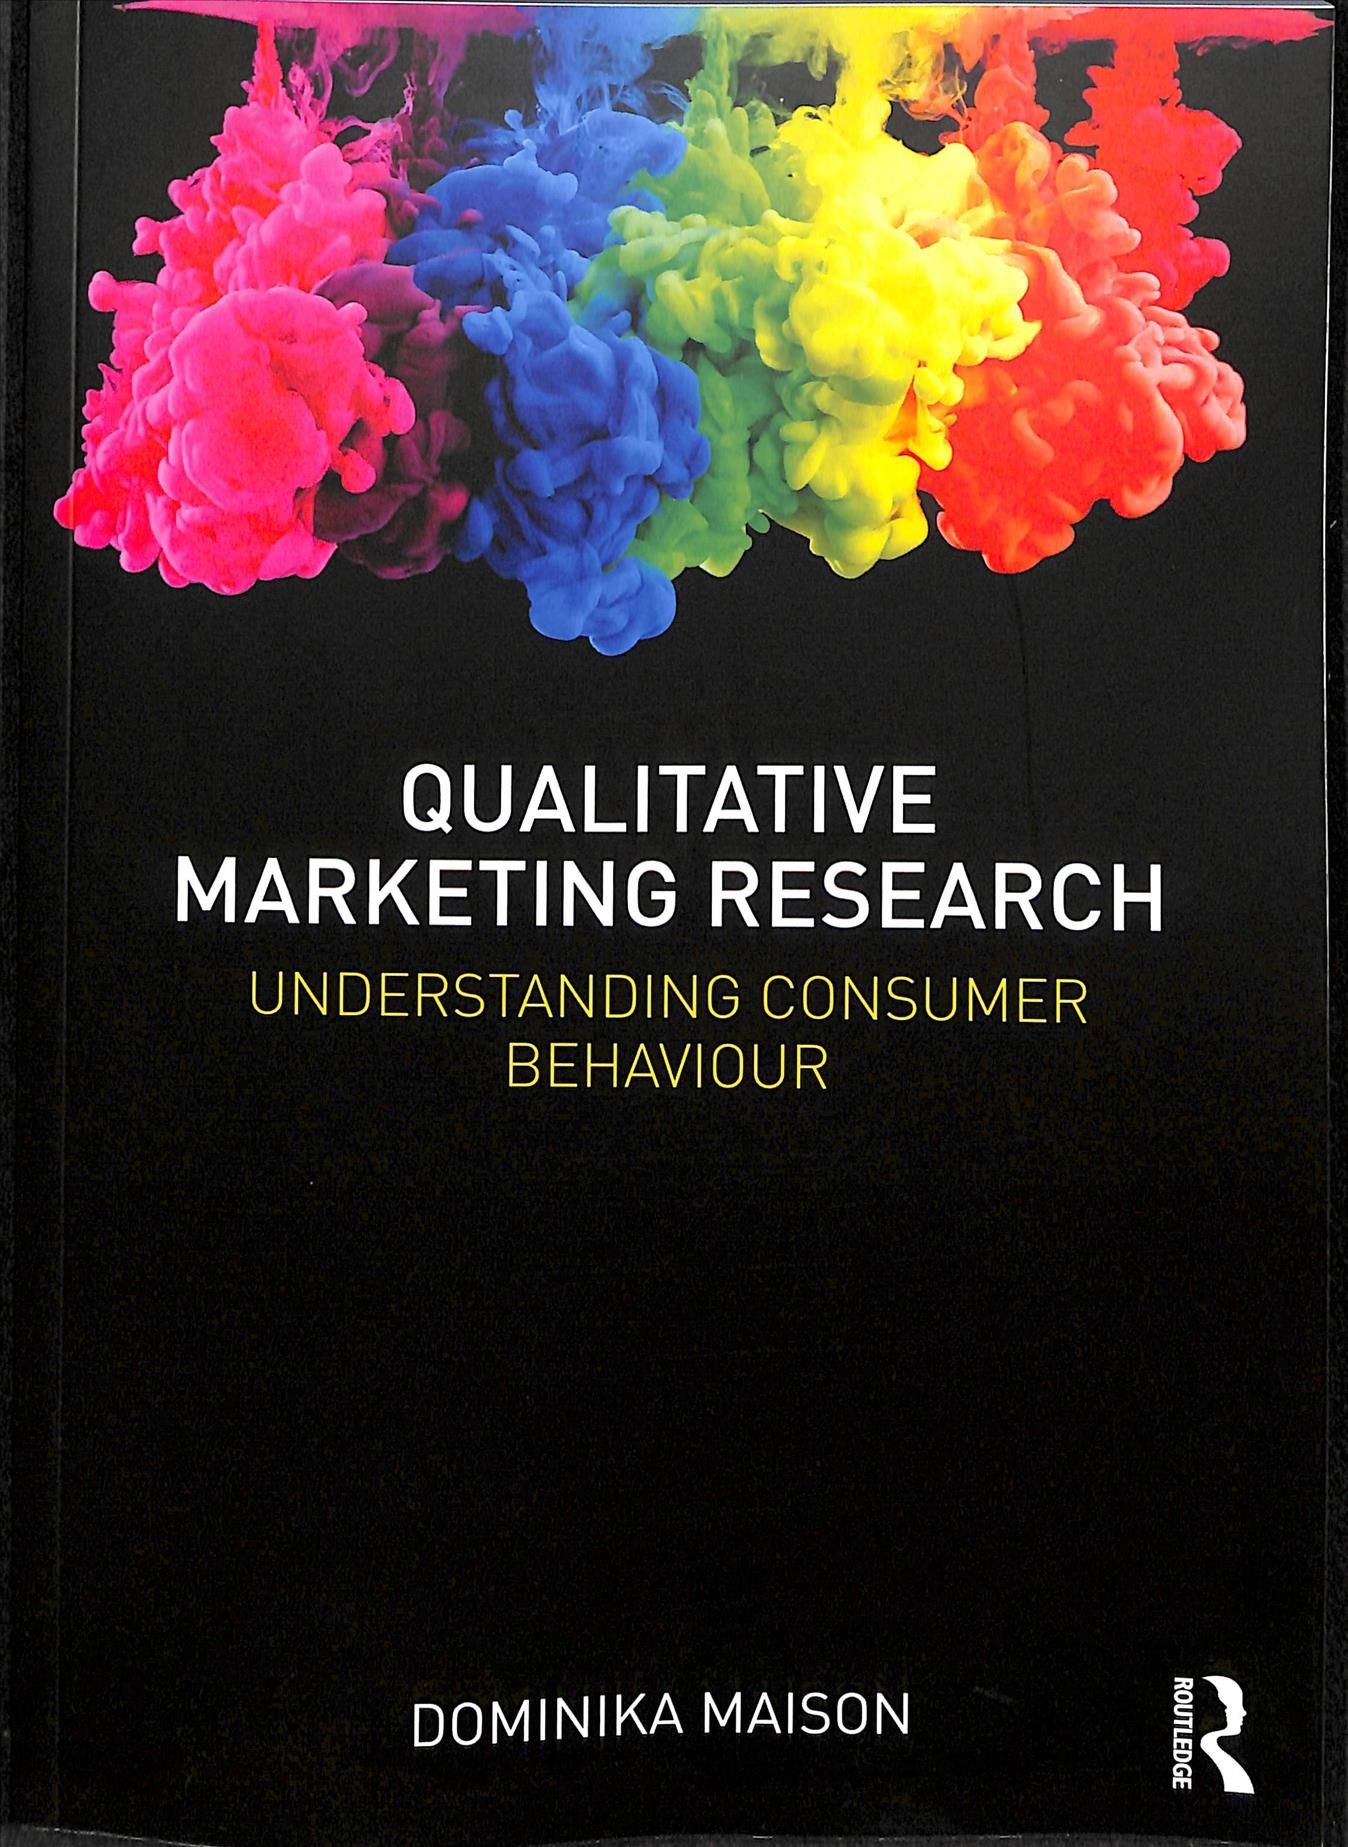 Qualitative Marketing Research